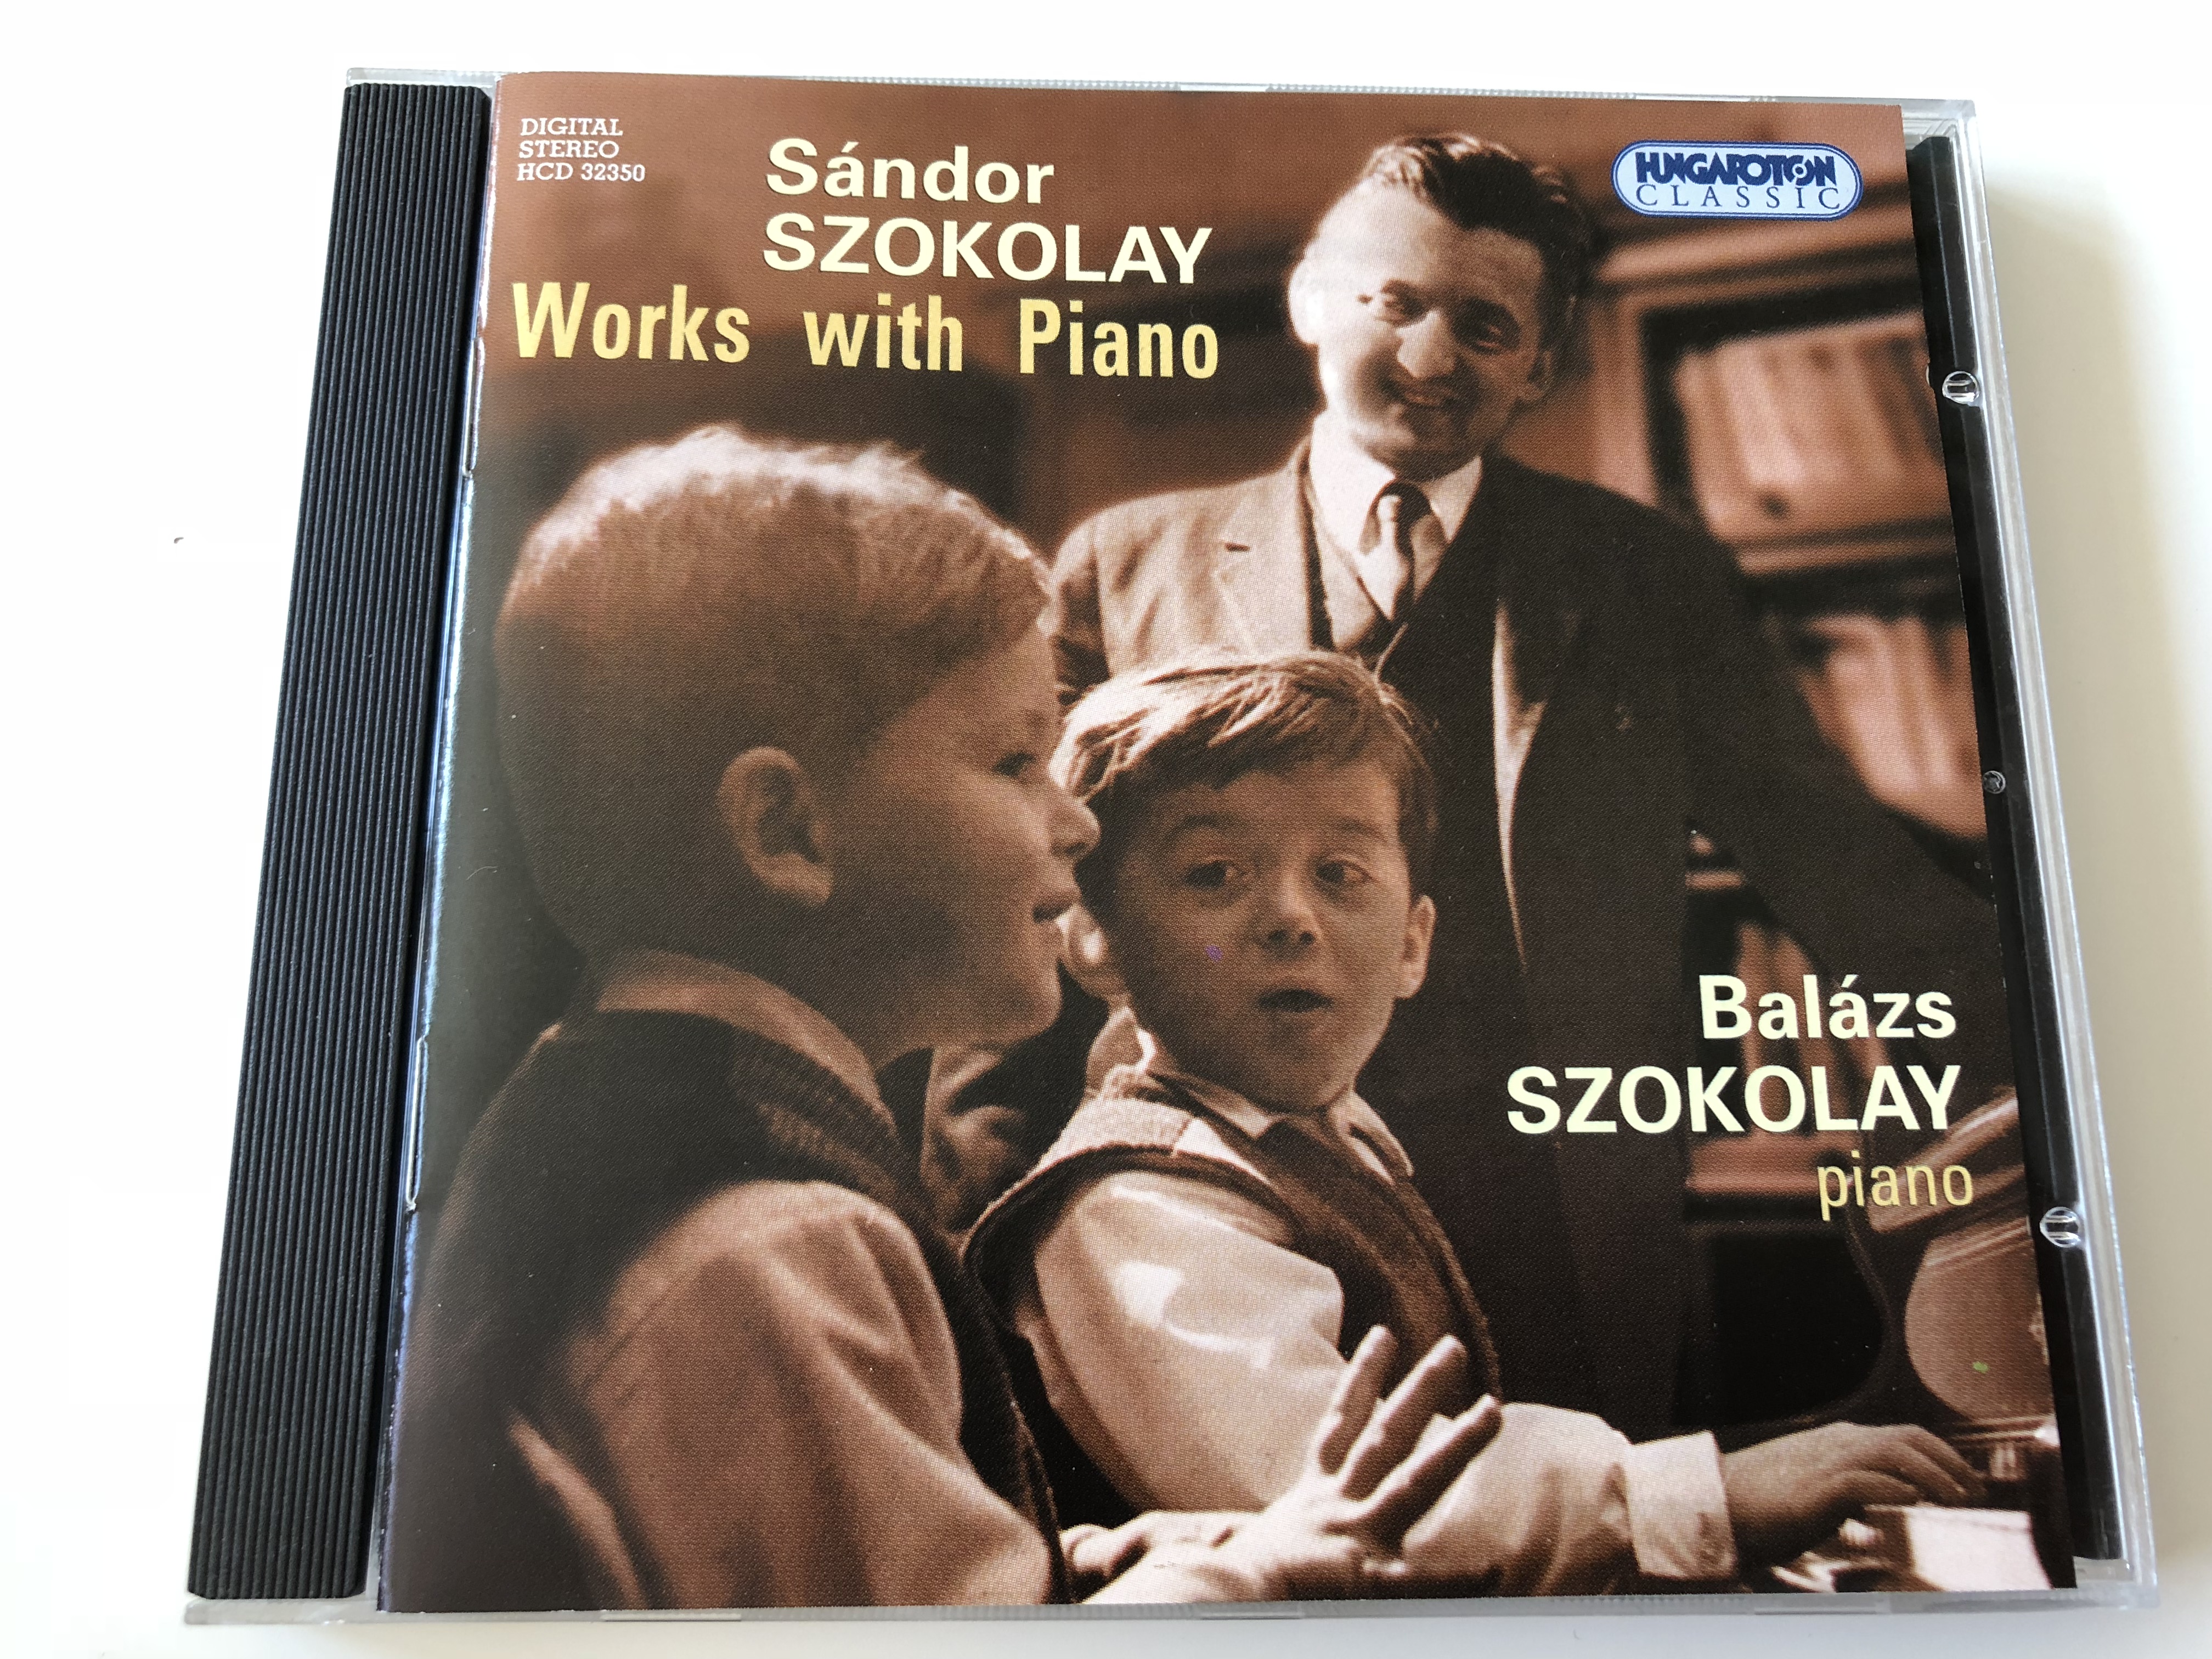 sa-ndor-szokolay-works-with-piano-bala-zs-szokolay-pian-audio-cd-2004-hungaroton-classic-hcd32350.jpg